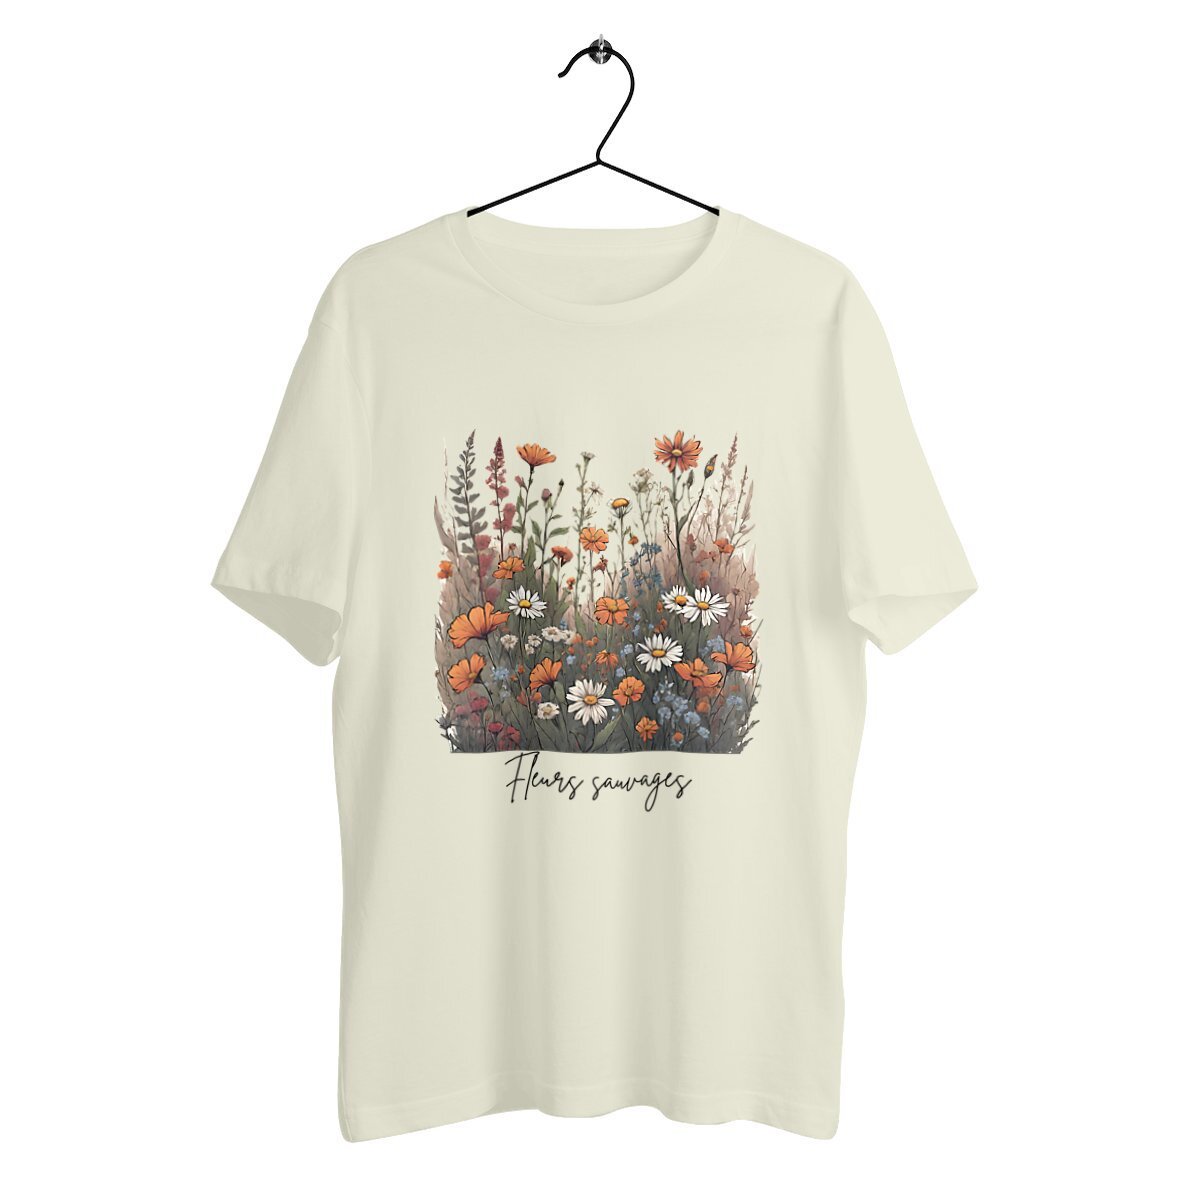 T-shirt Fleurs Sauvages - EtiKo